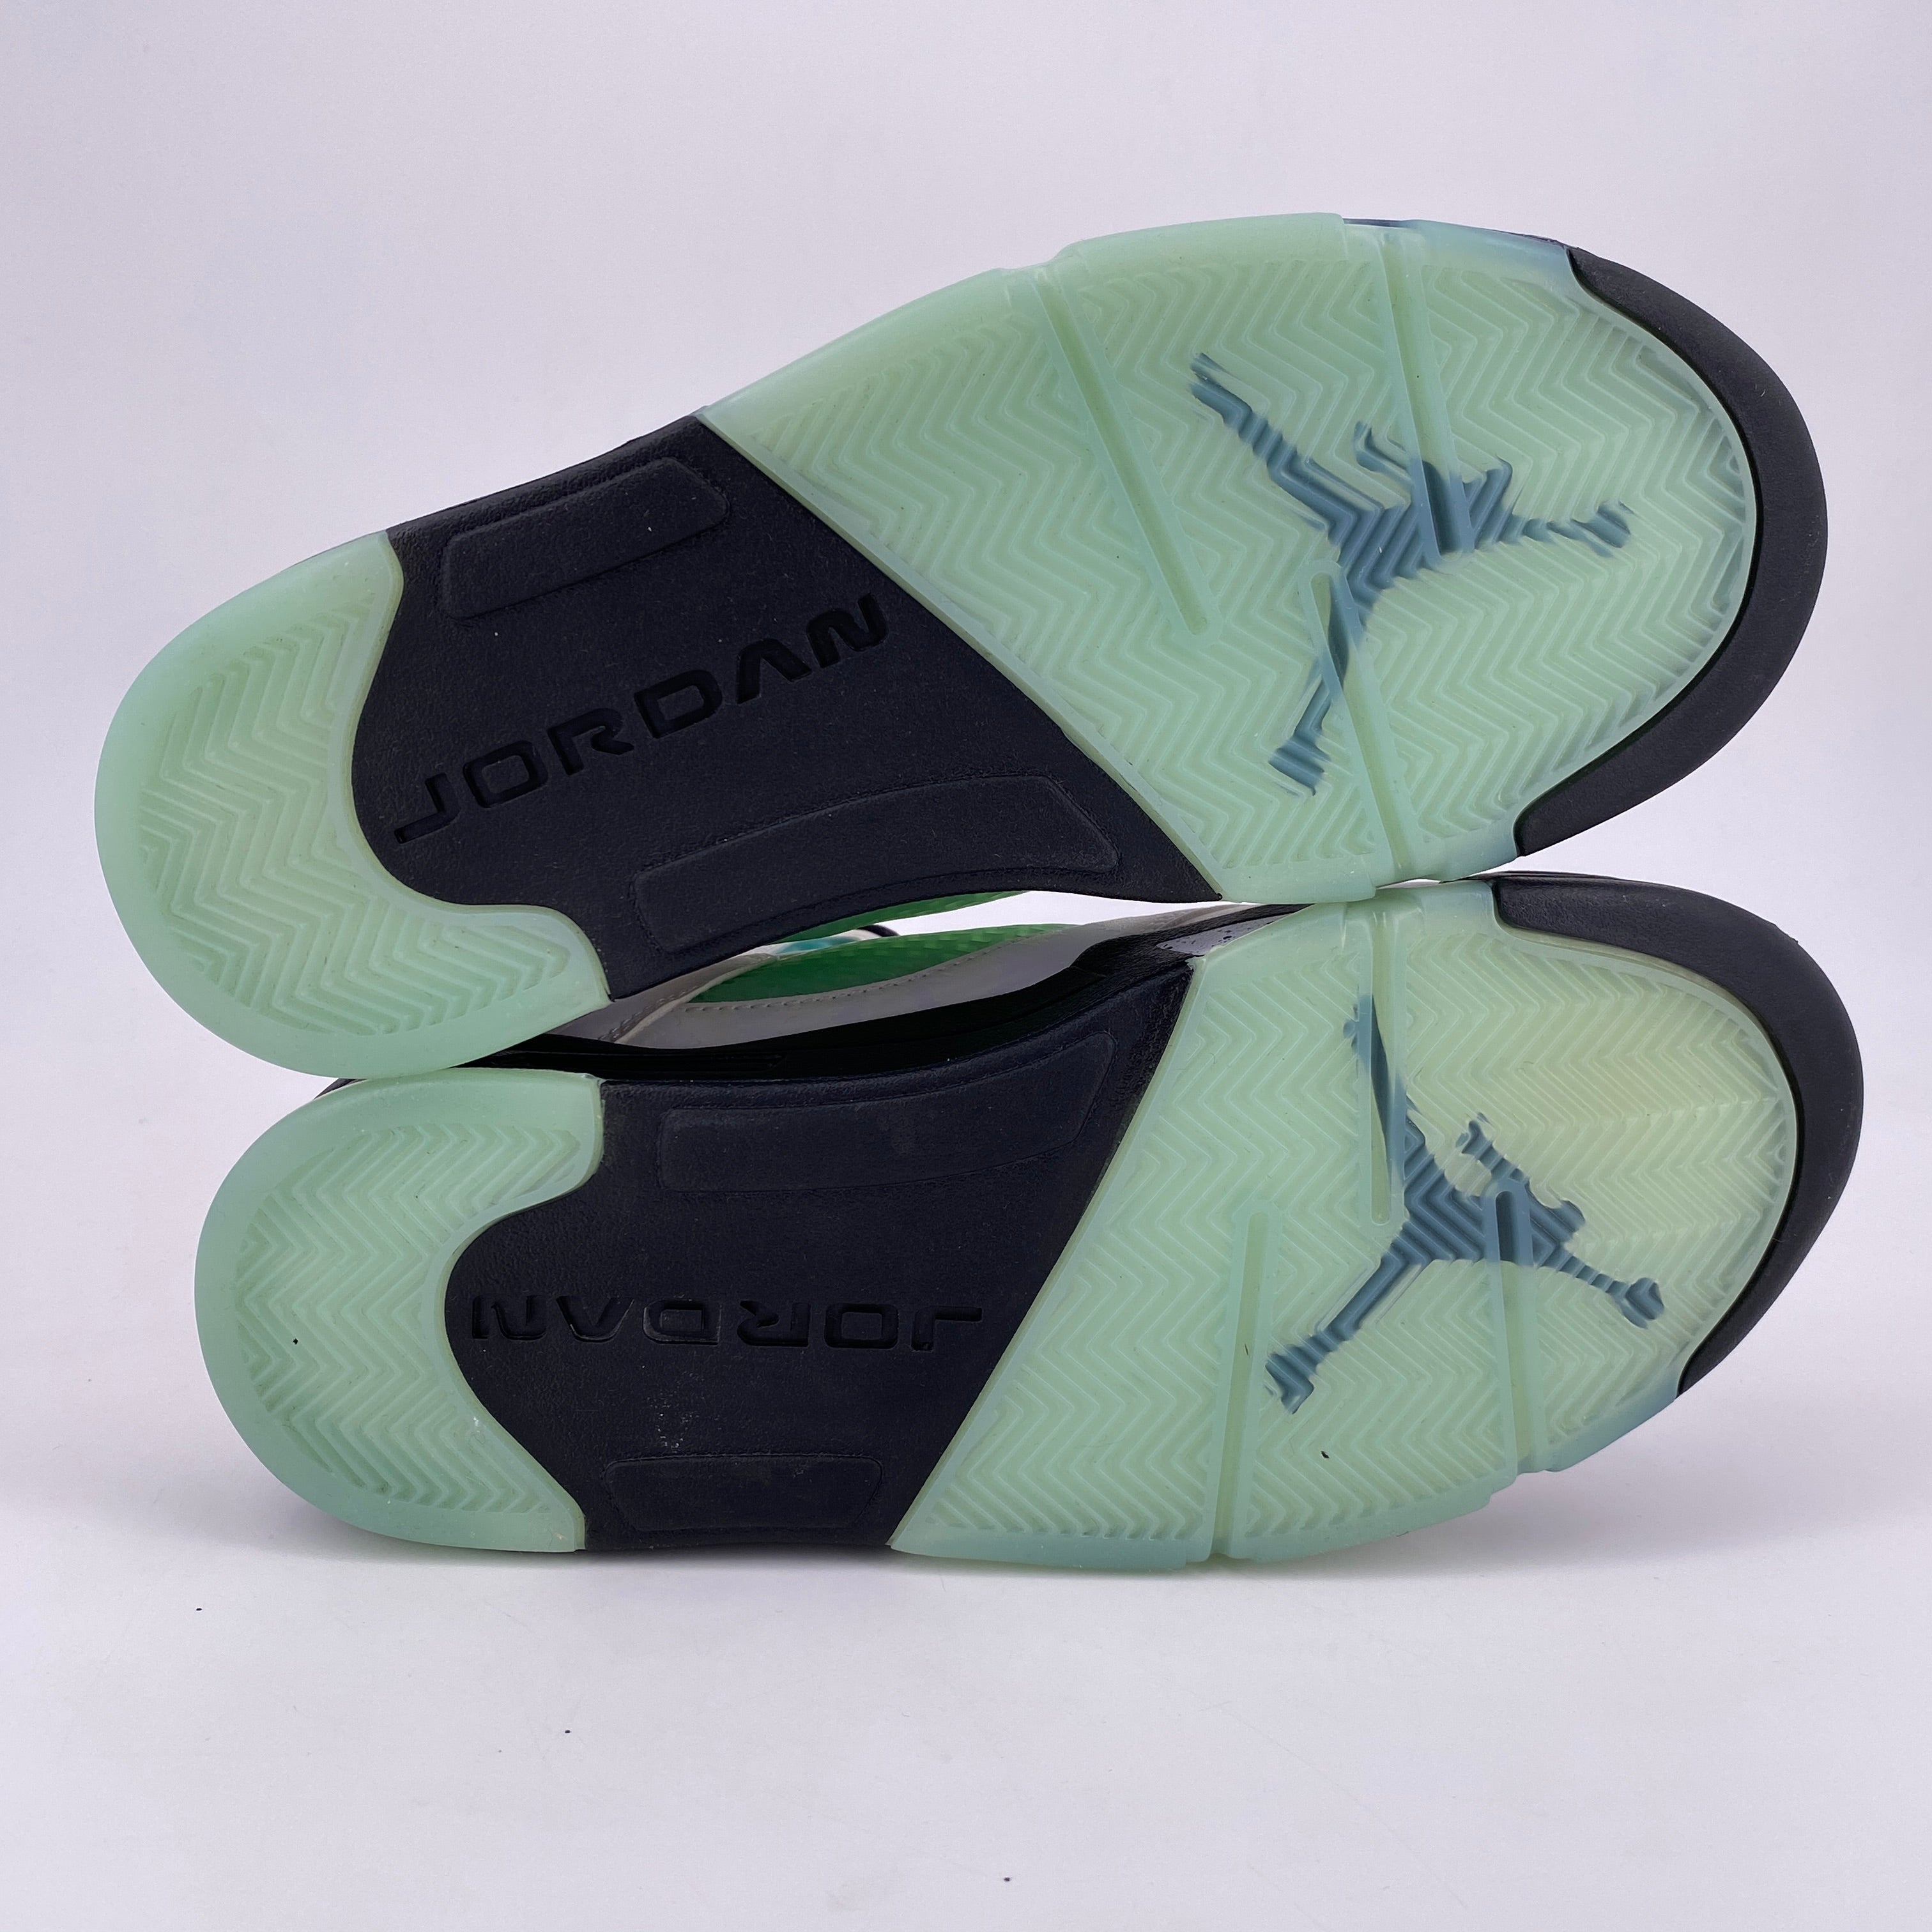 Air Jordan 5 Retro "ISLAND GREEN" 2019 Used Size 8.5